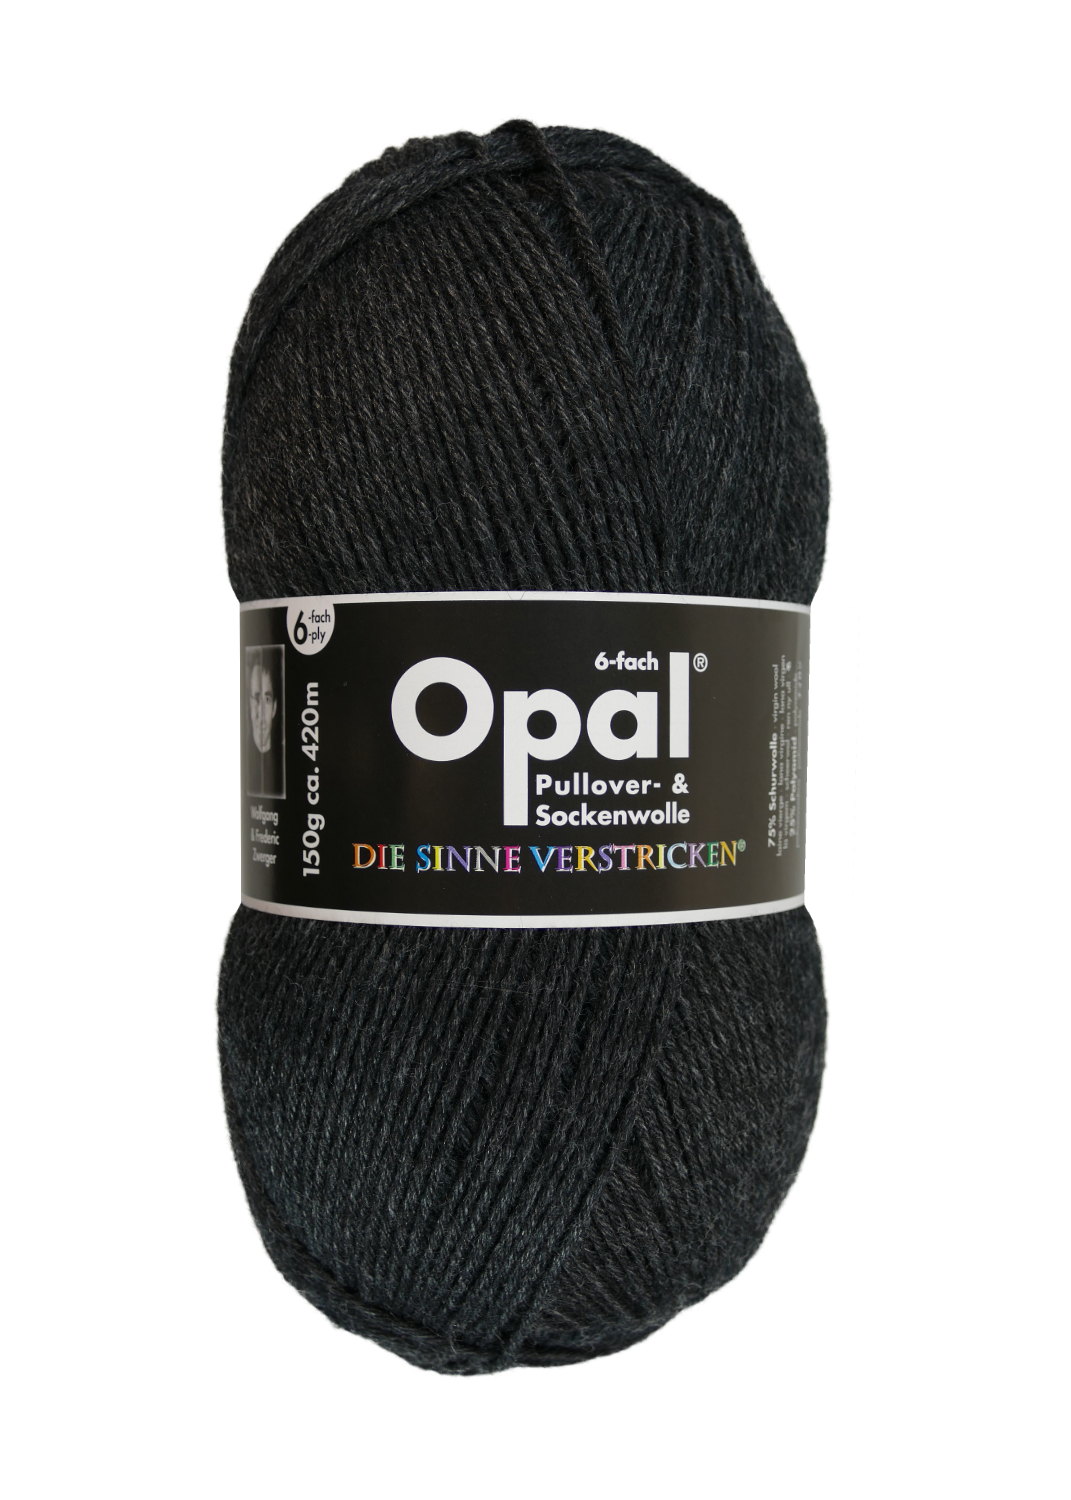 OPAL Uni - 6-fach Sockenwolle 5303 - anthrazit melange